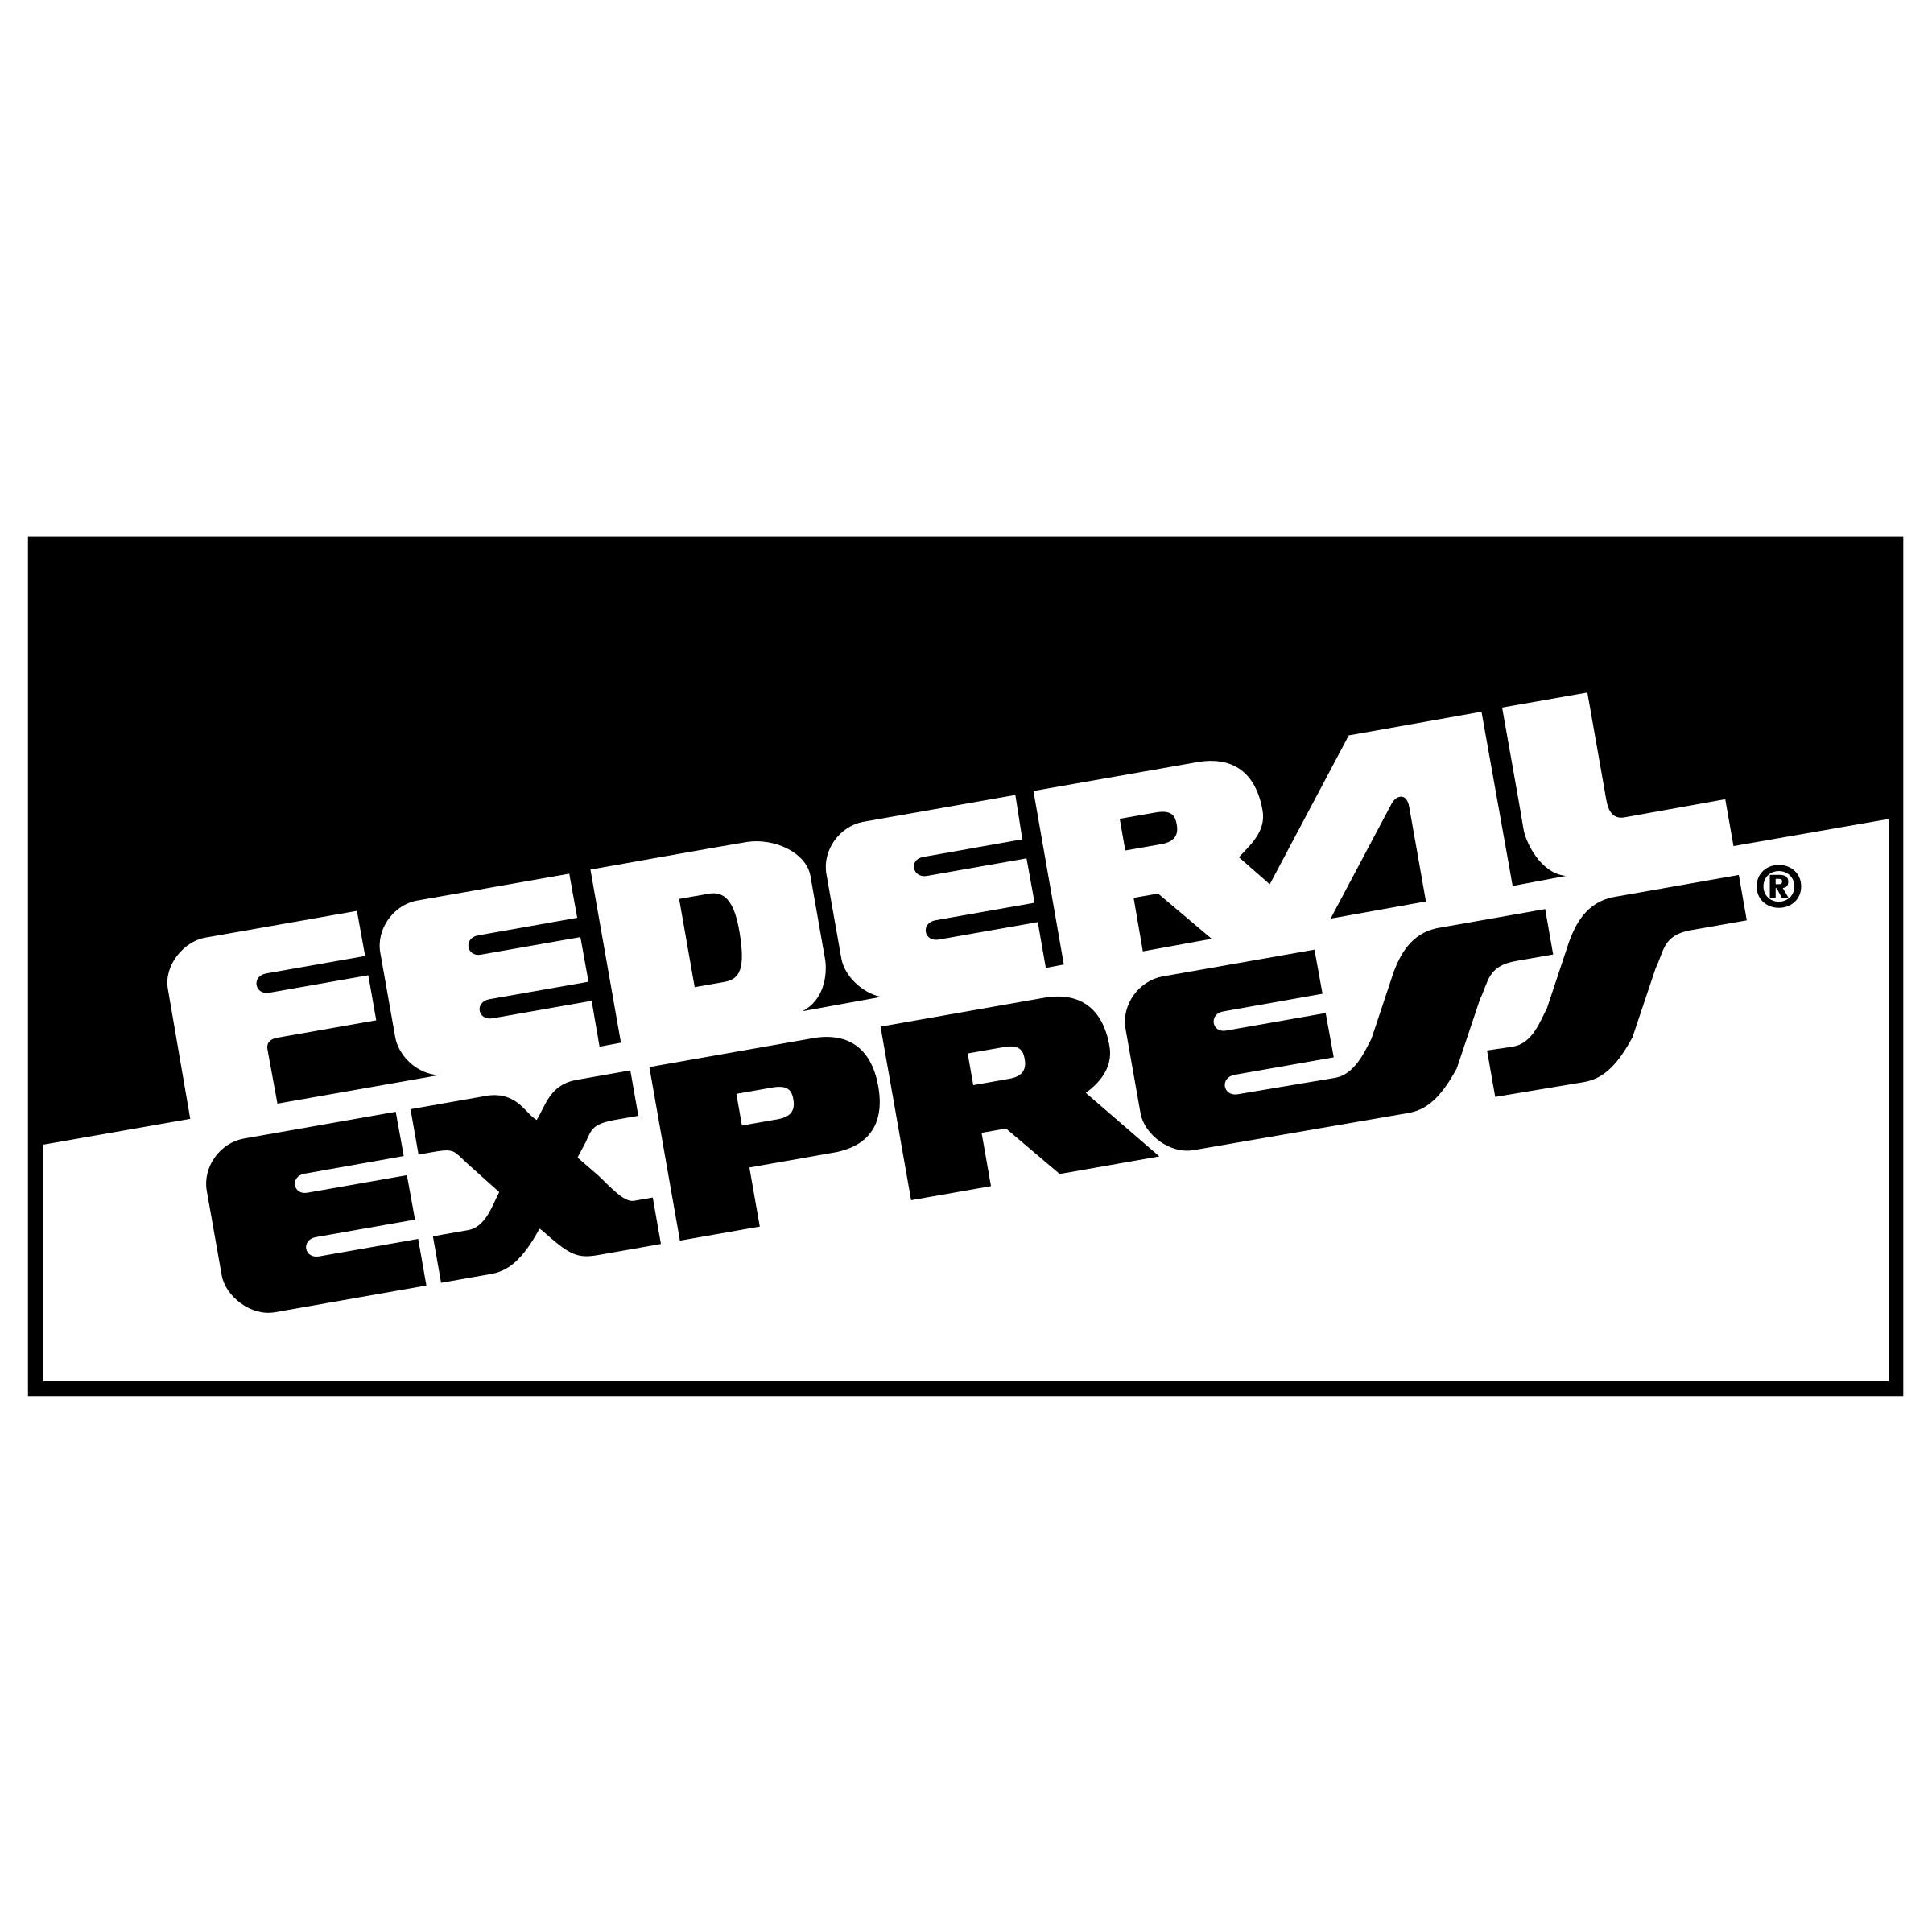 Federal Express Logo - Federal Express Logo PNG Transparent & SVG Vector - Freebie Supply